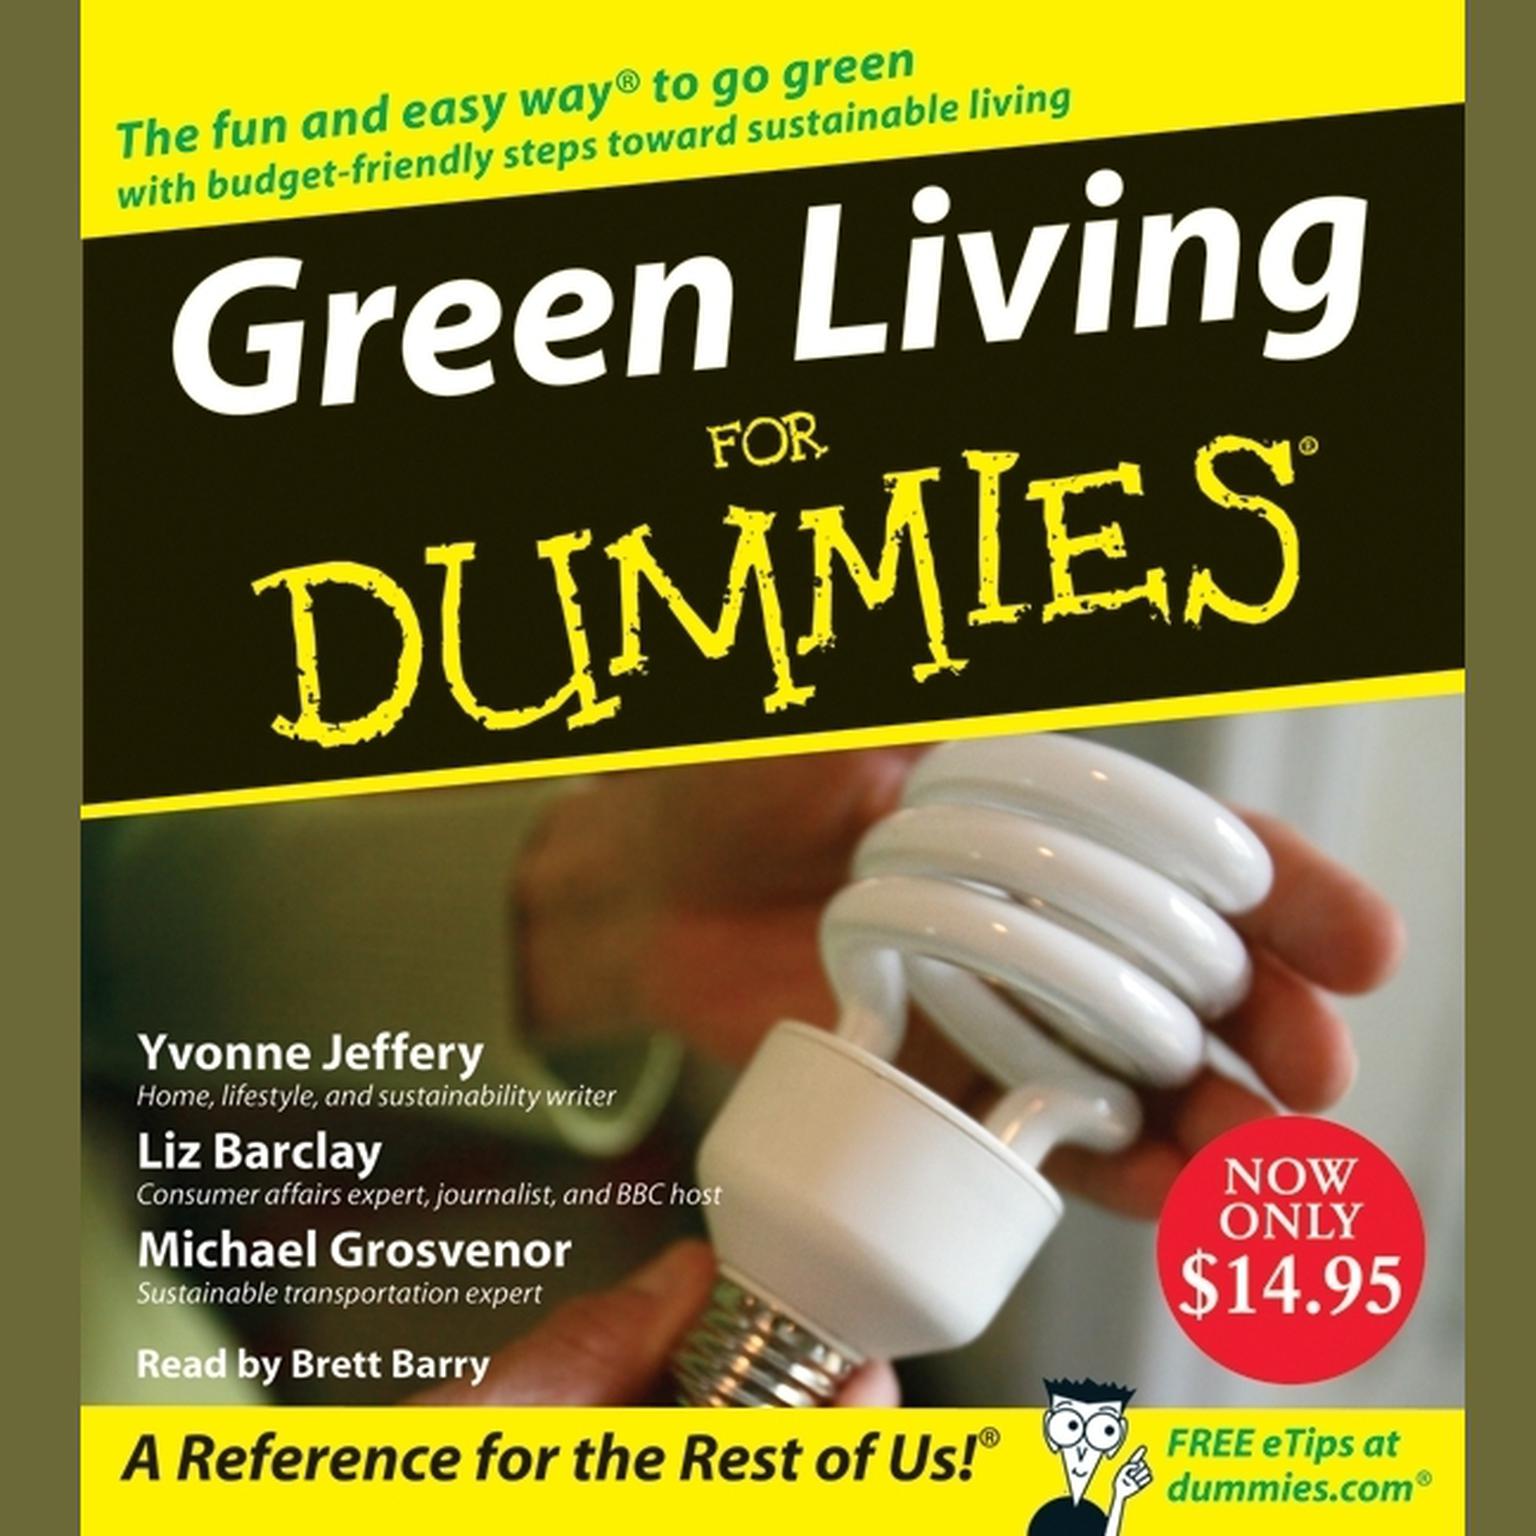 Green Living for Dummies (Abridged) Audiobook, by Yvonne Jeffery